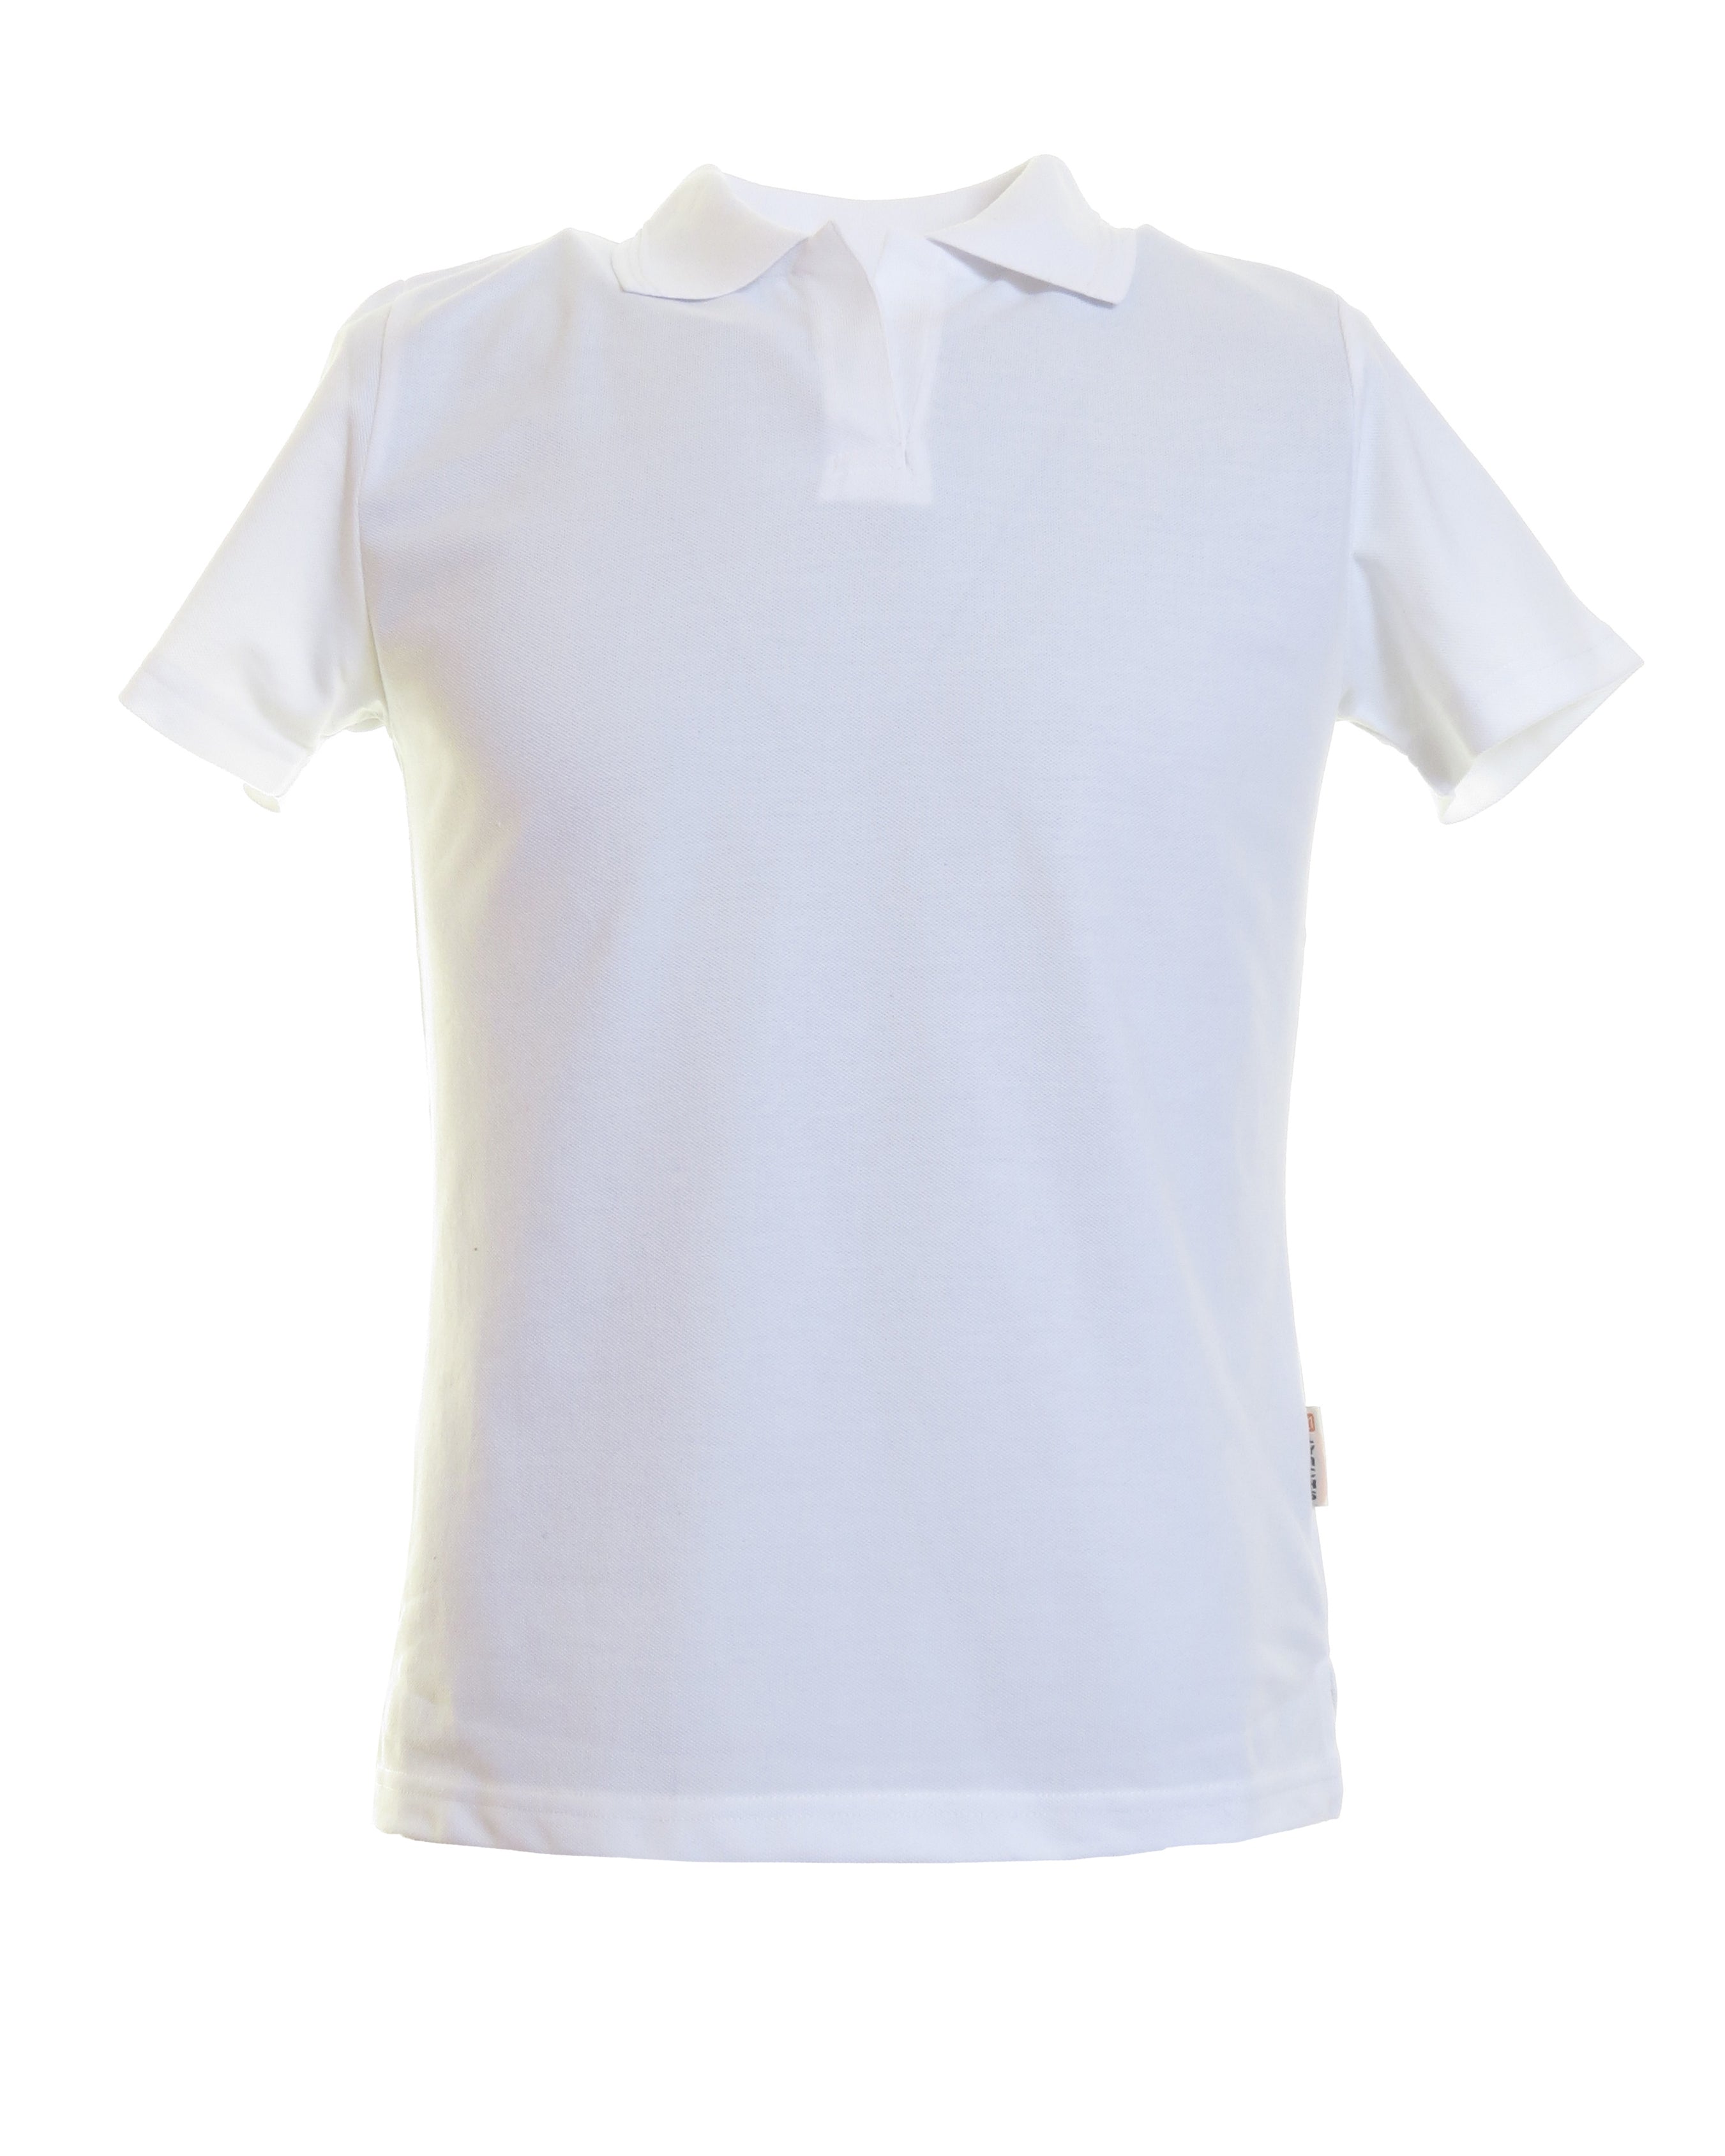 Ladies Fit Plain White Polo Shirt